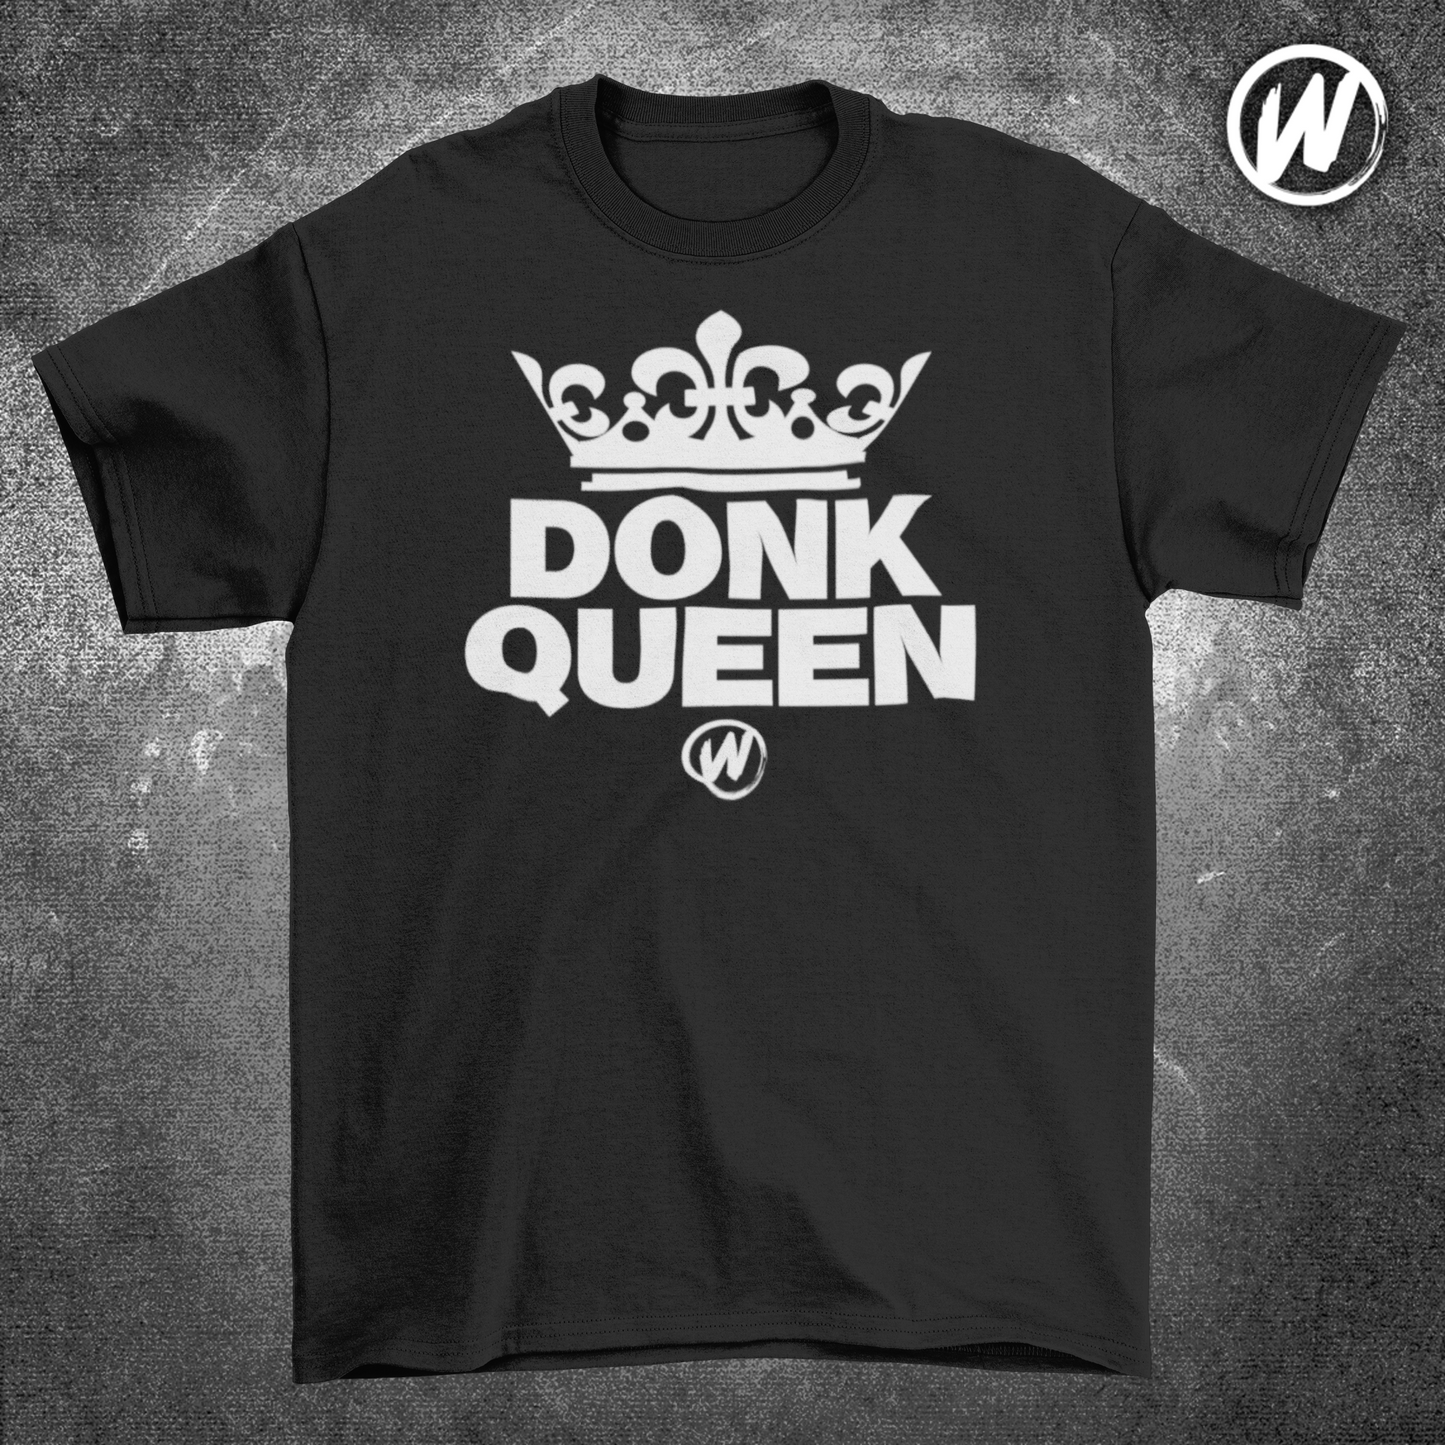 Donk Queen - Black T-shirt